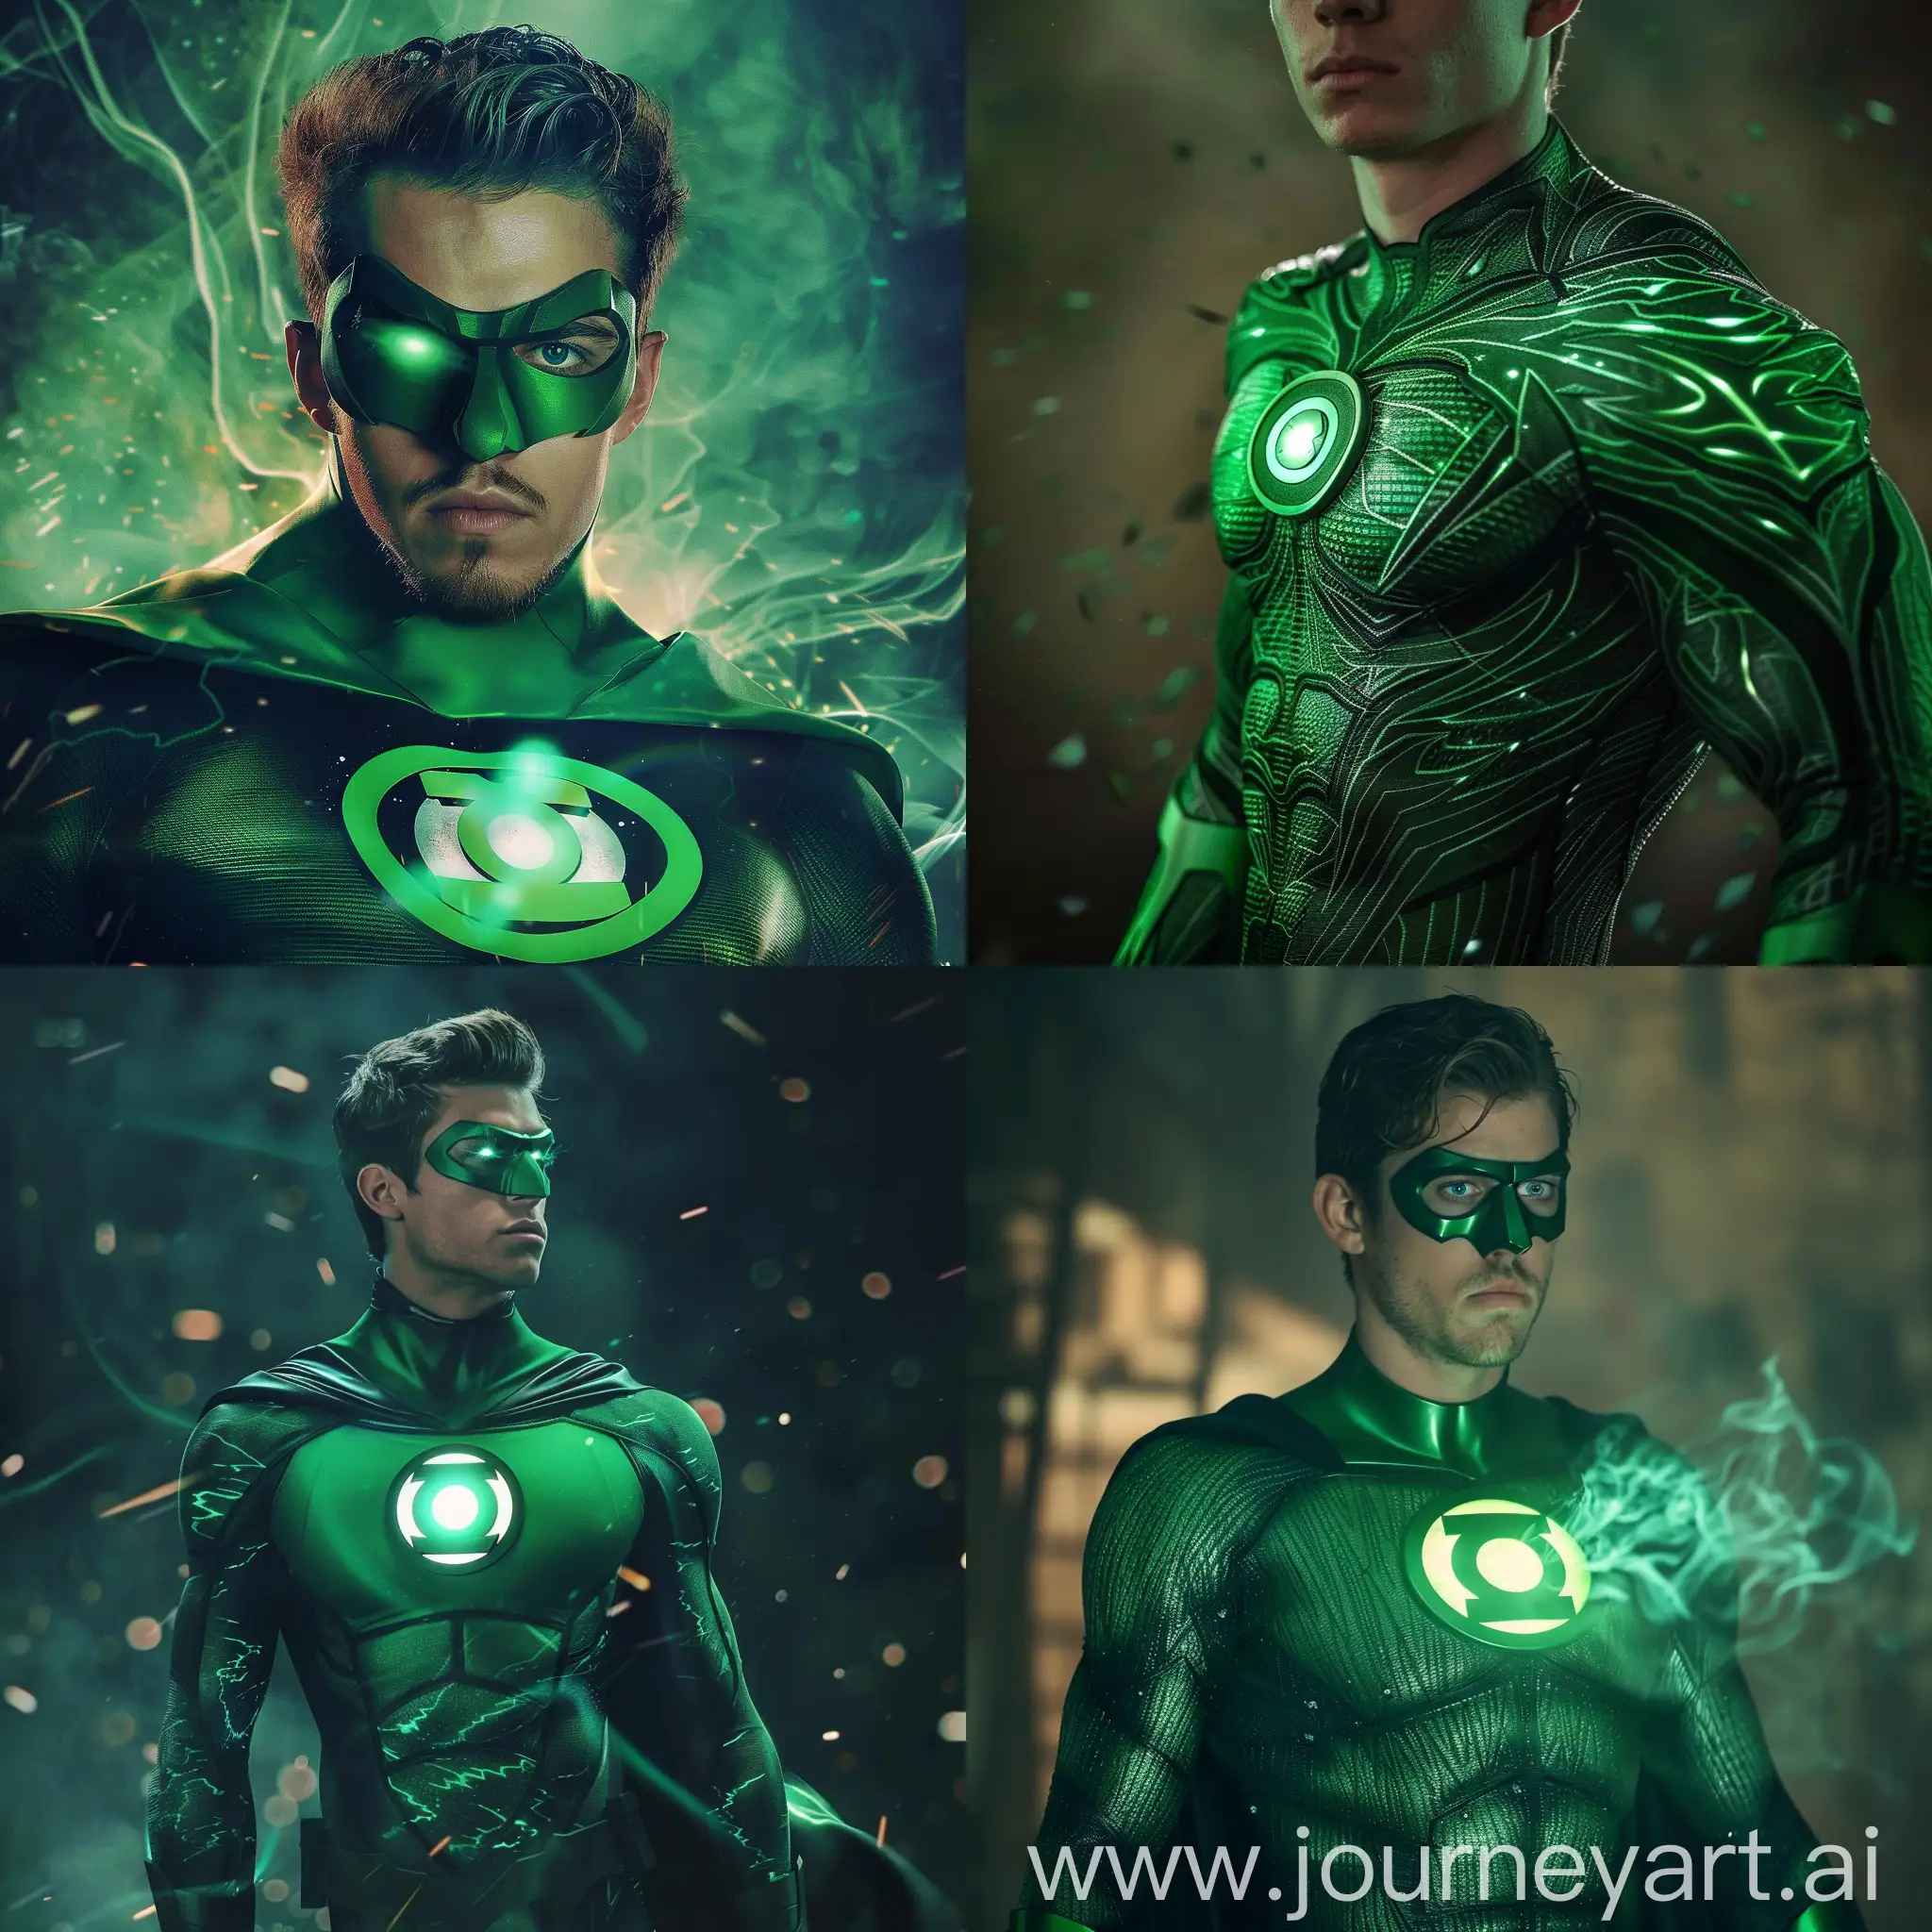 Austin Butler as The Green Lantern